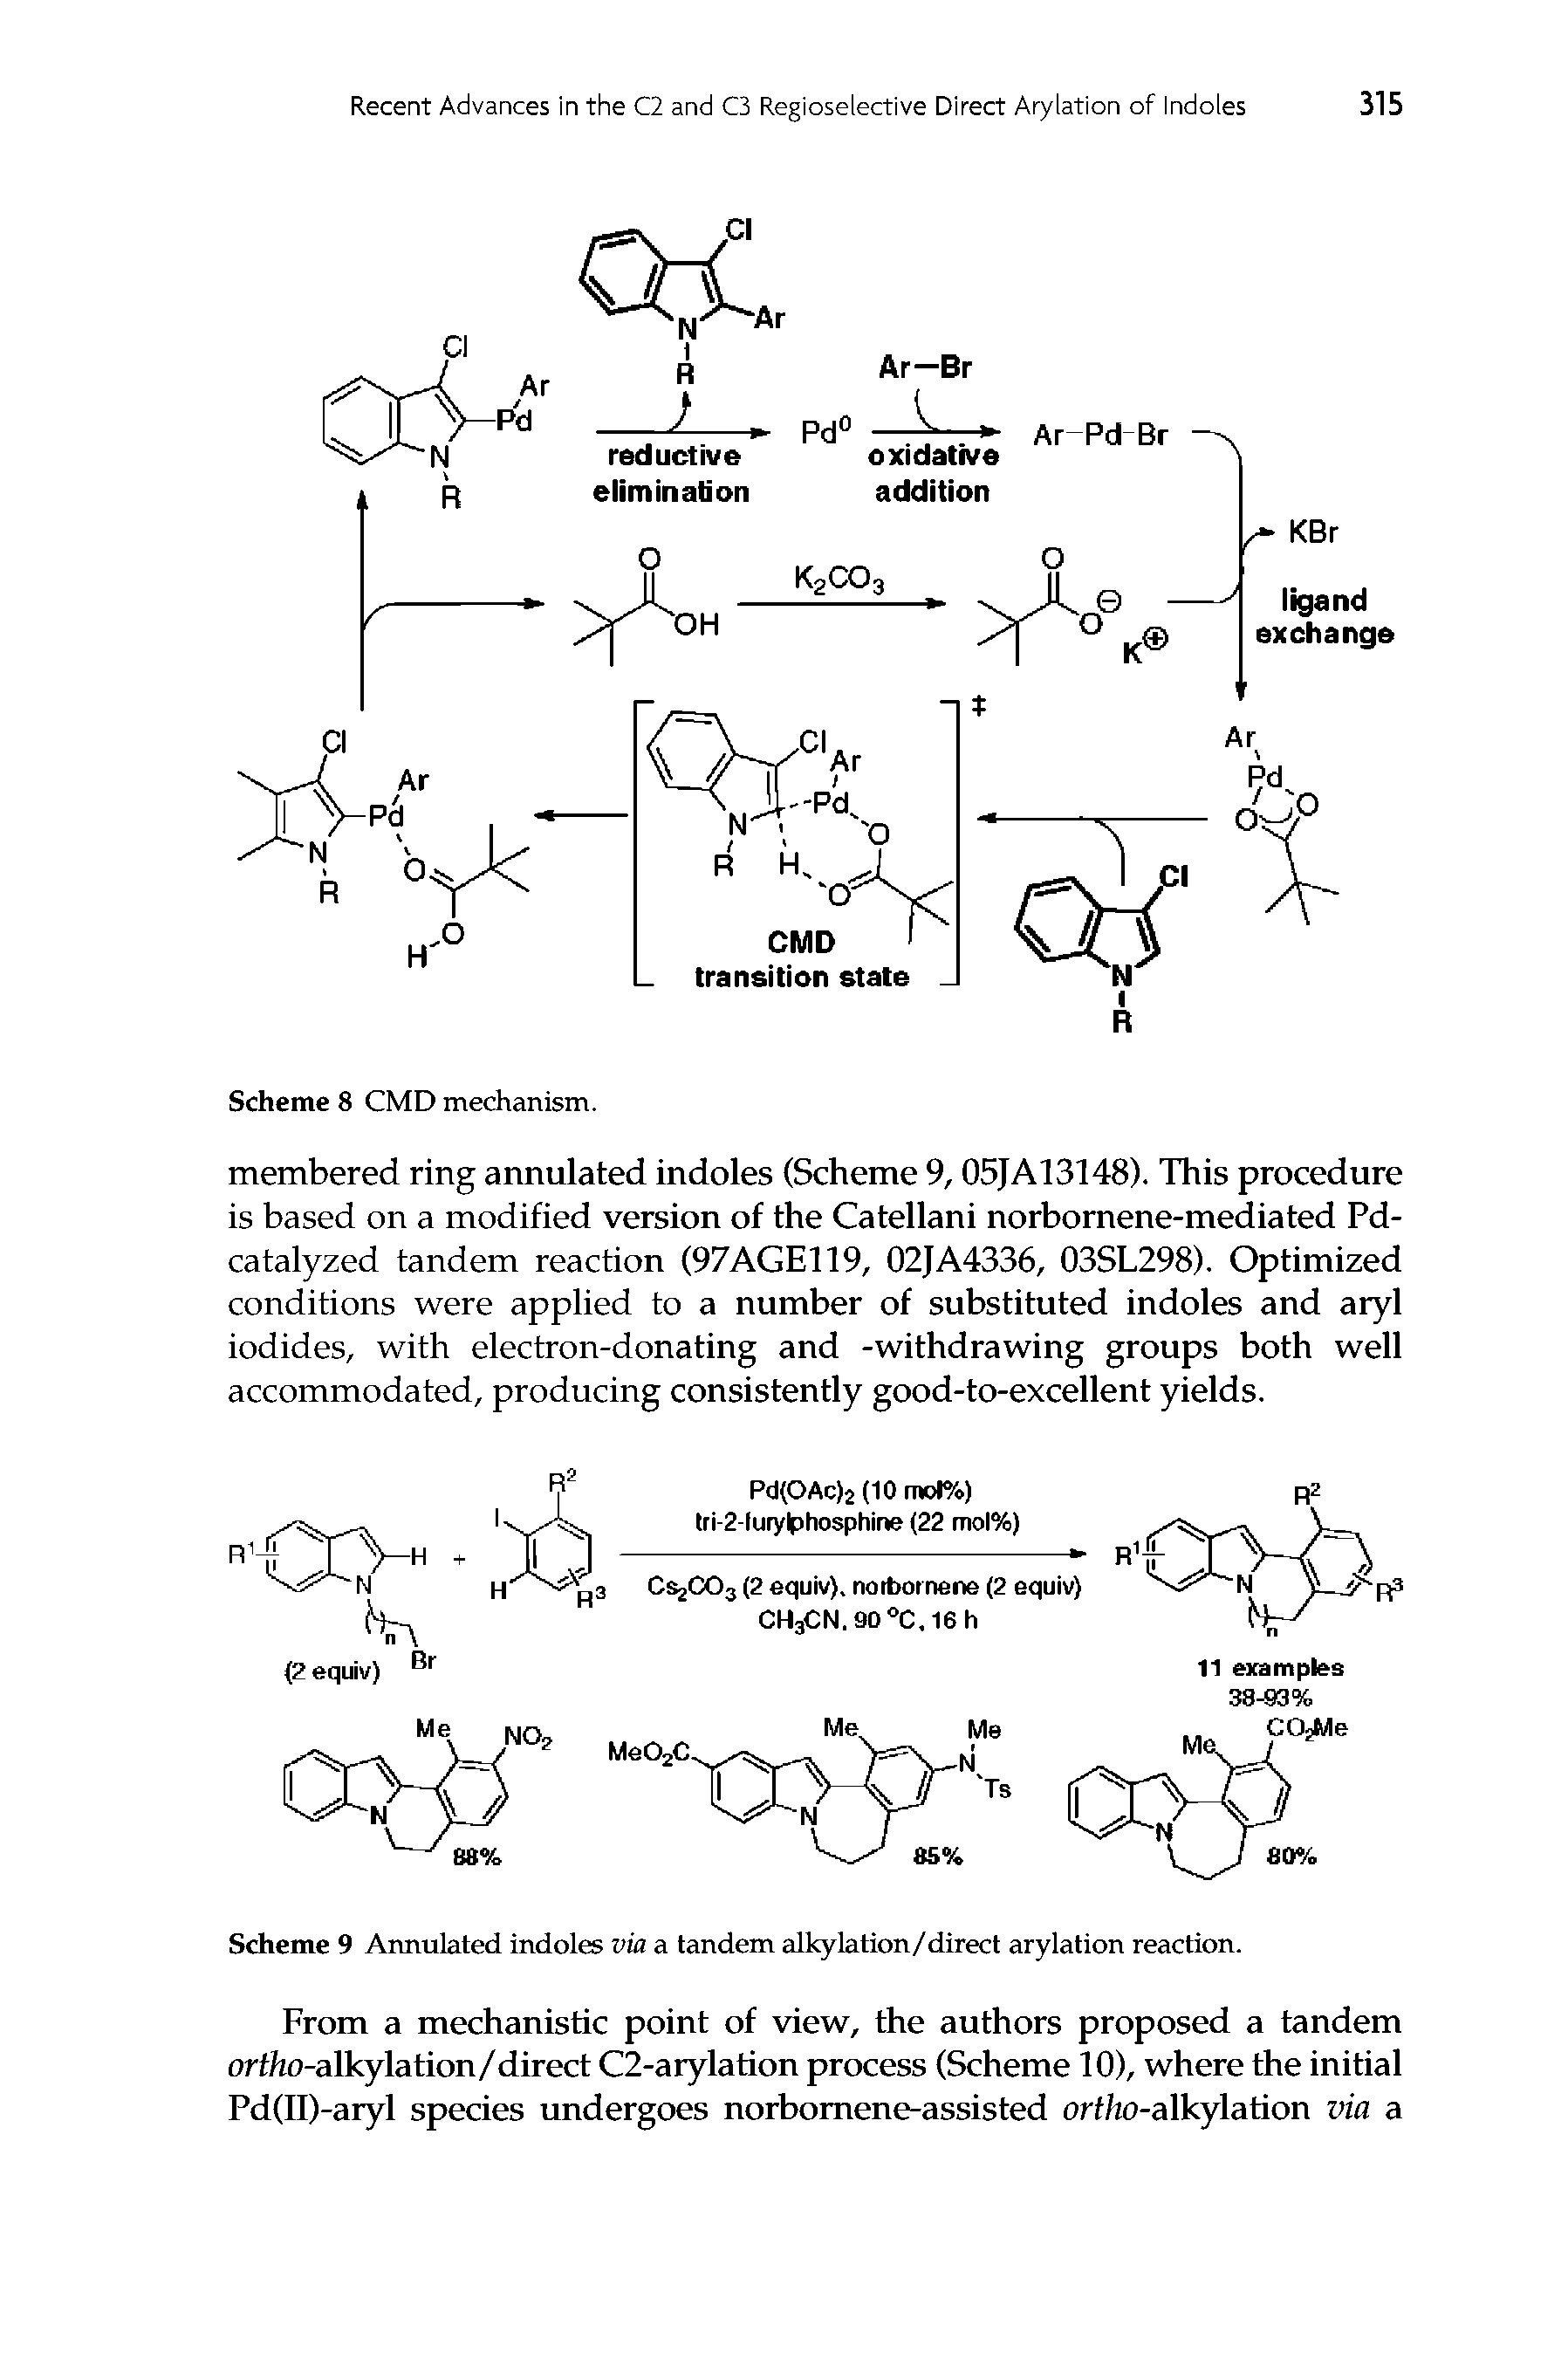 Scheme 9 Annulated indoles via a tandem alkylation/direct arylation reaction.